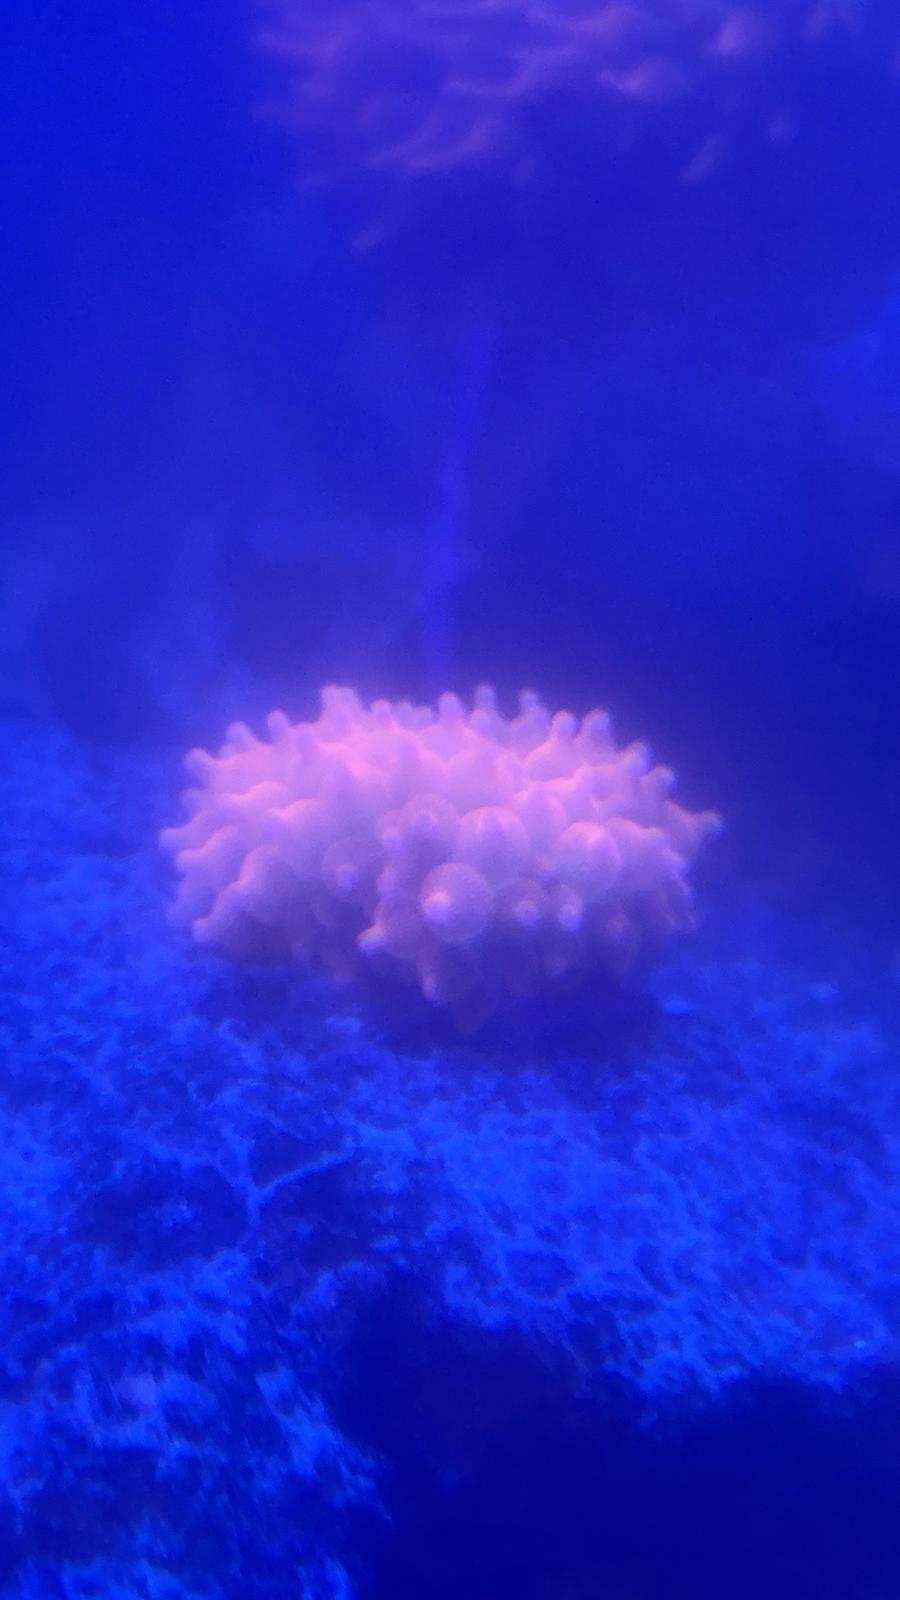 Rainbow bubble tip anemone medium